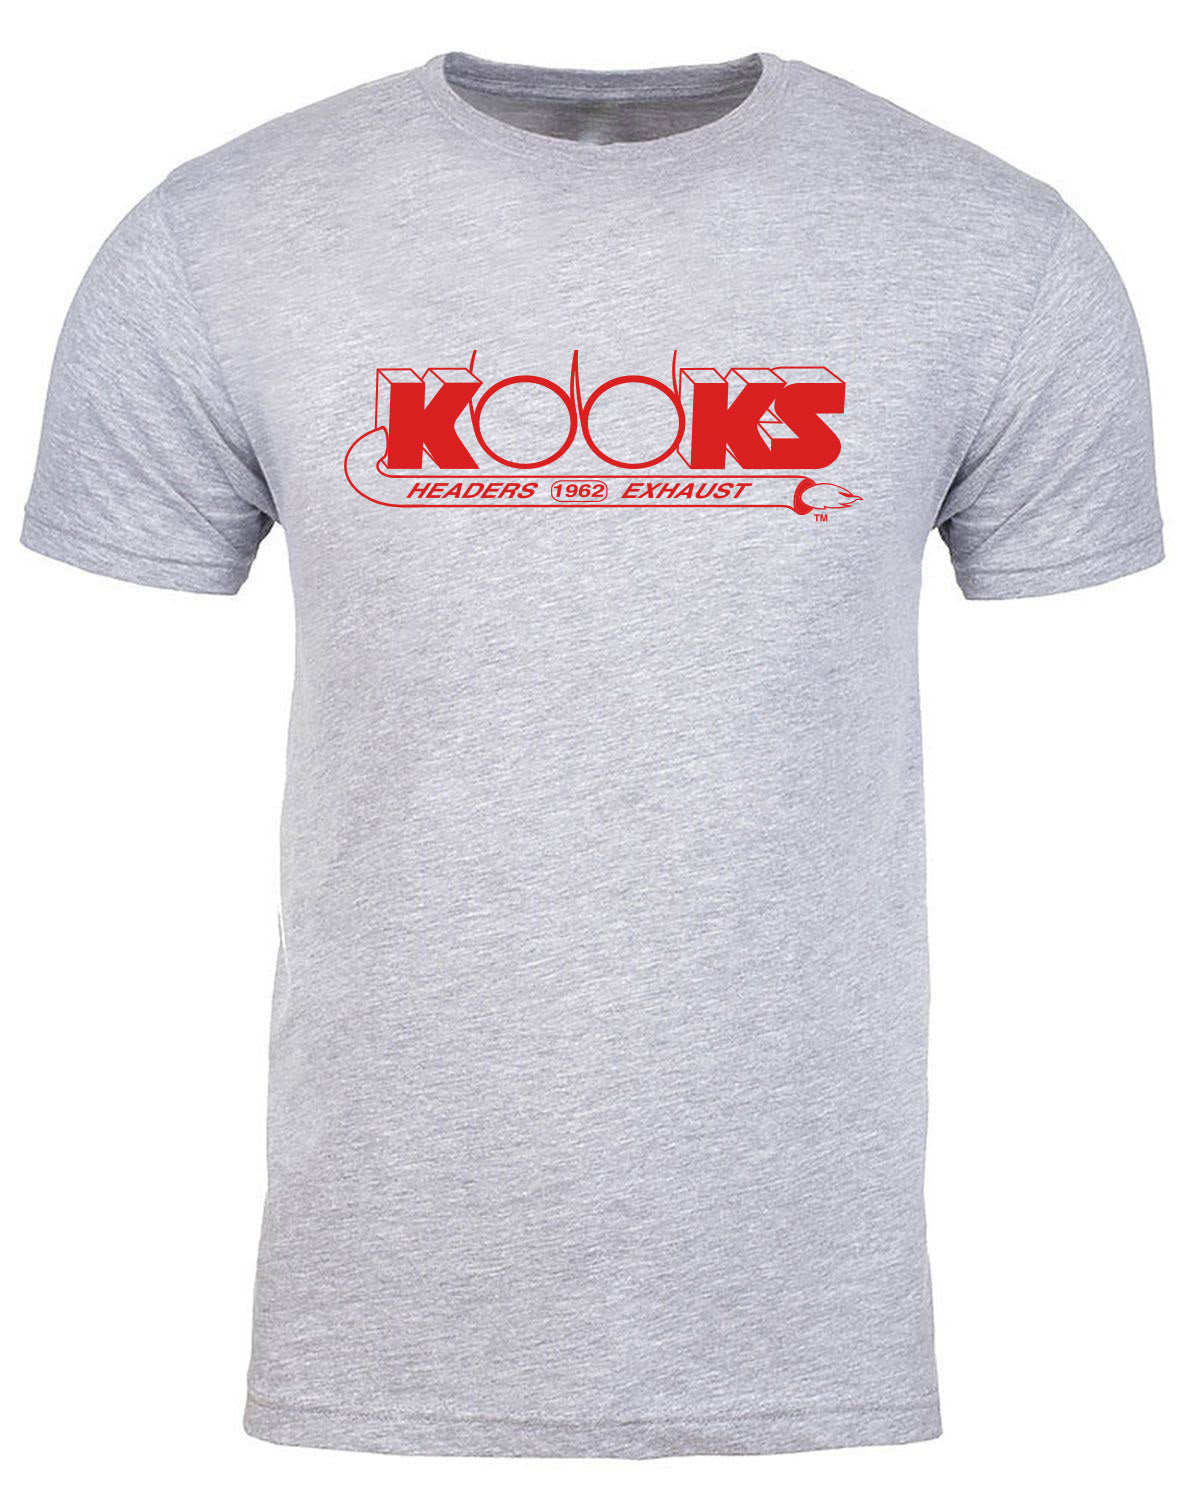 Kooks Custom Headers T-Shirt TS-100648-00